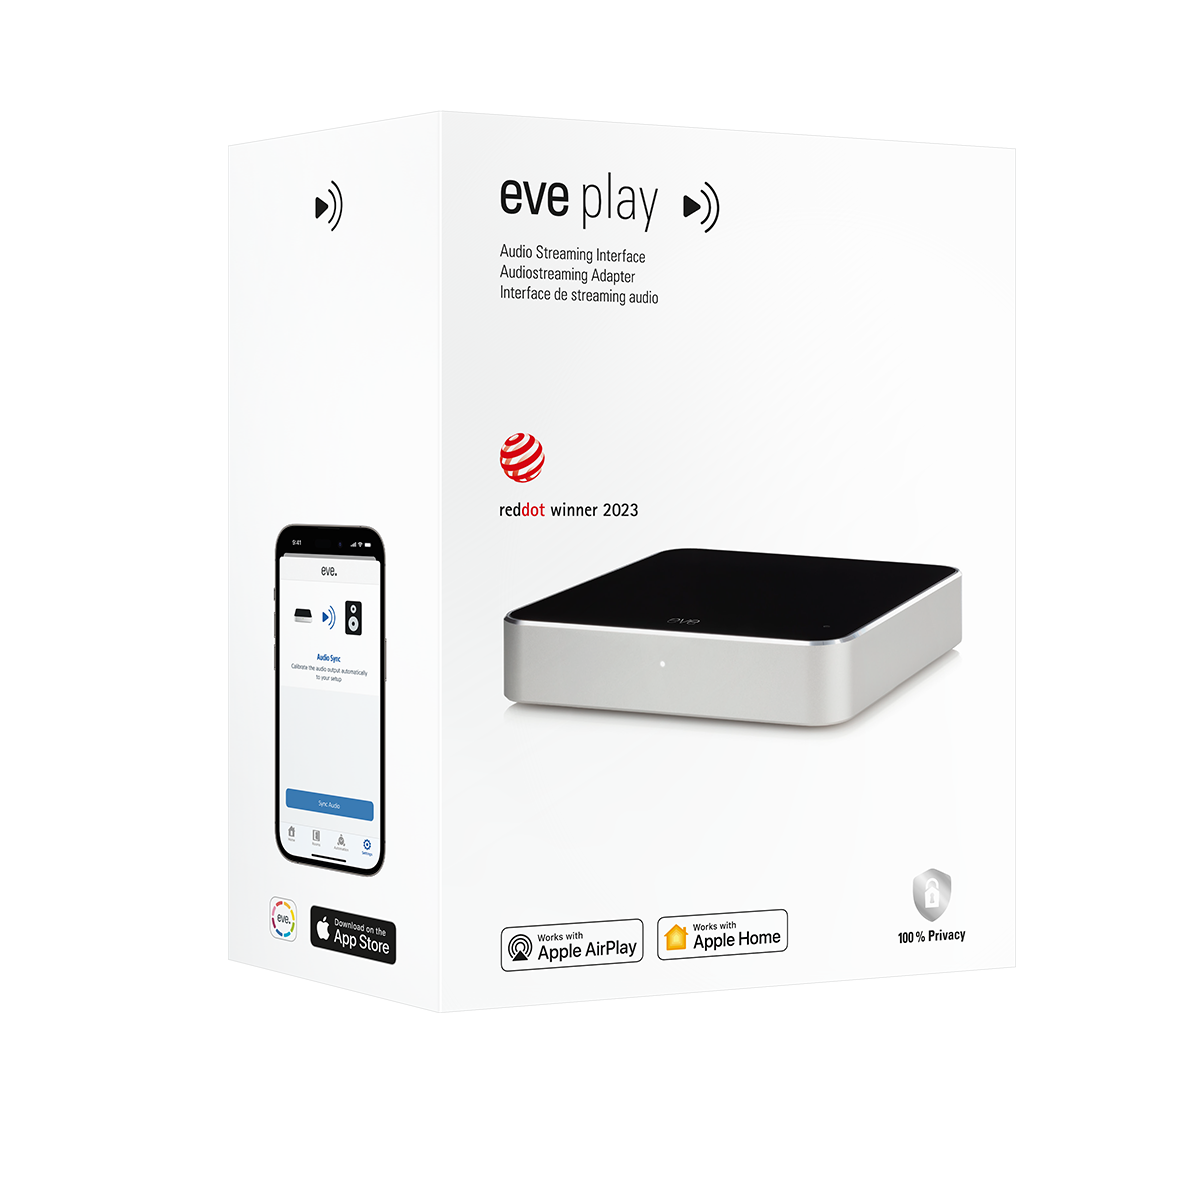 Eve Play box